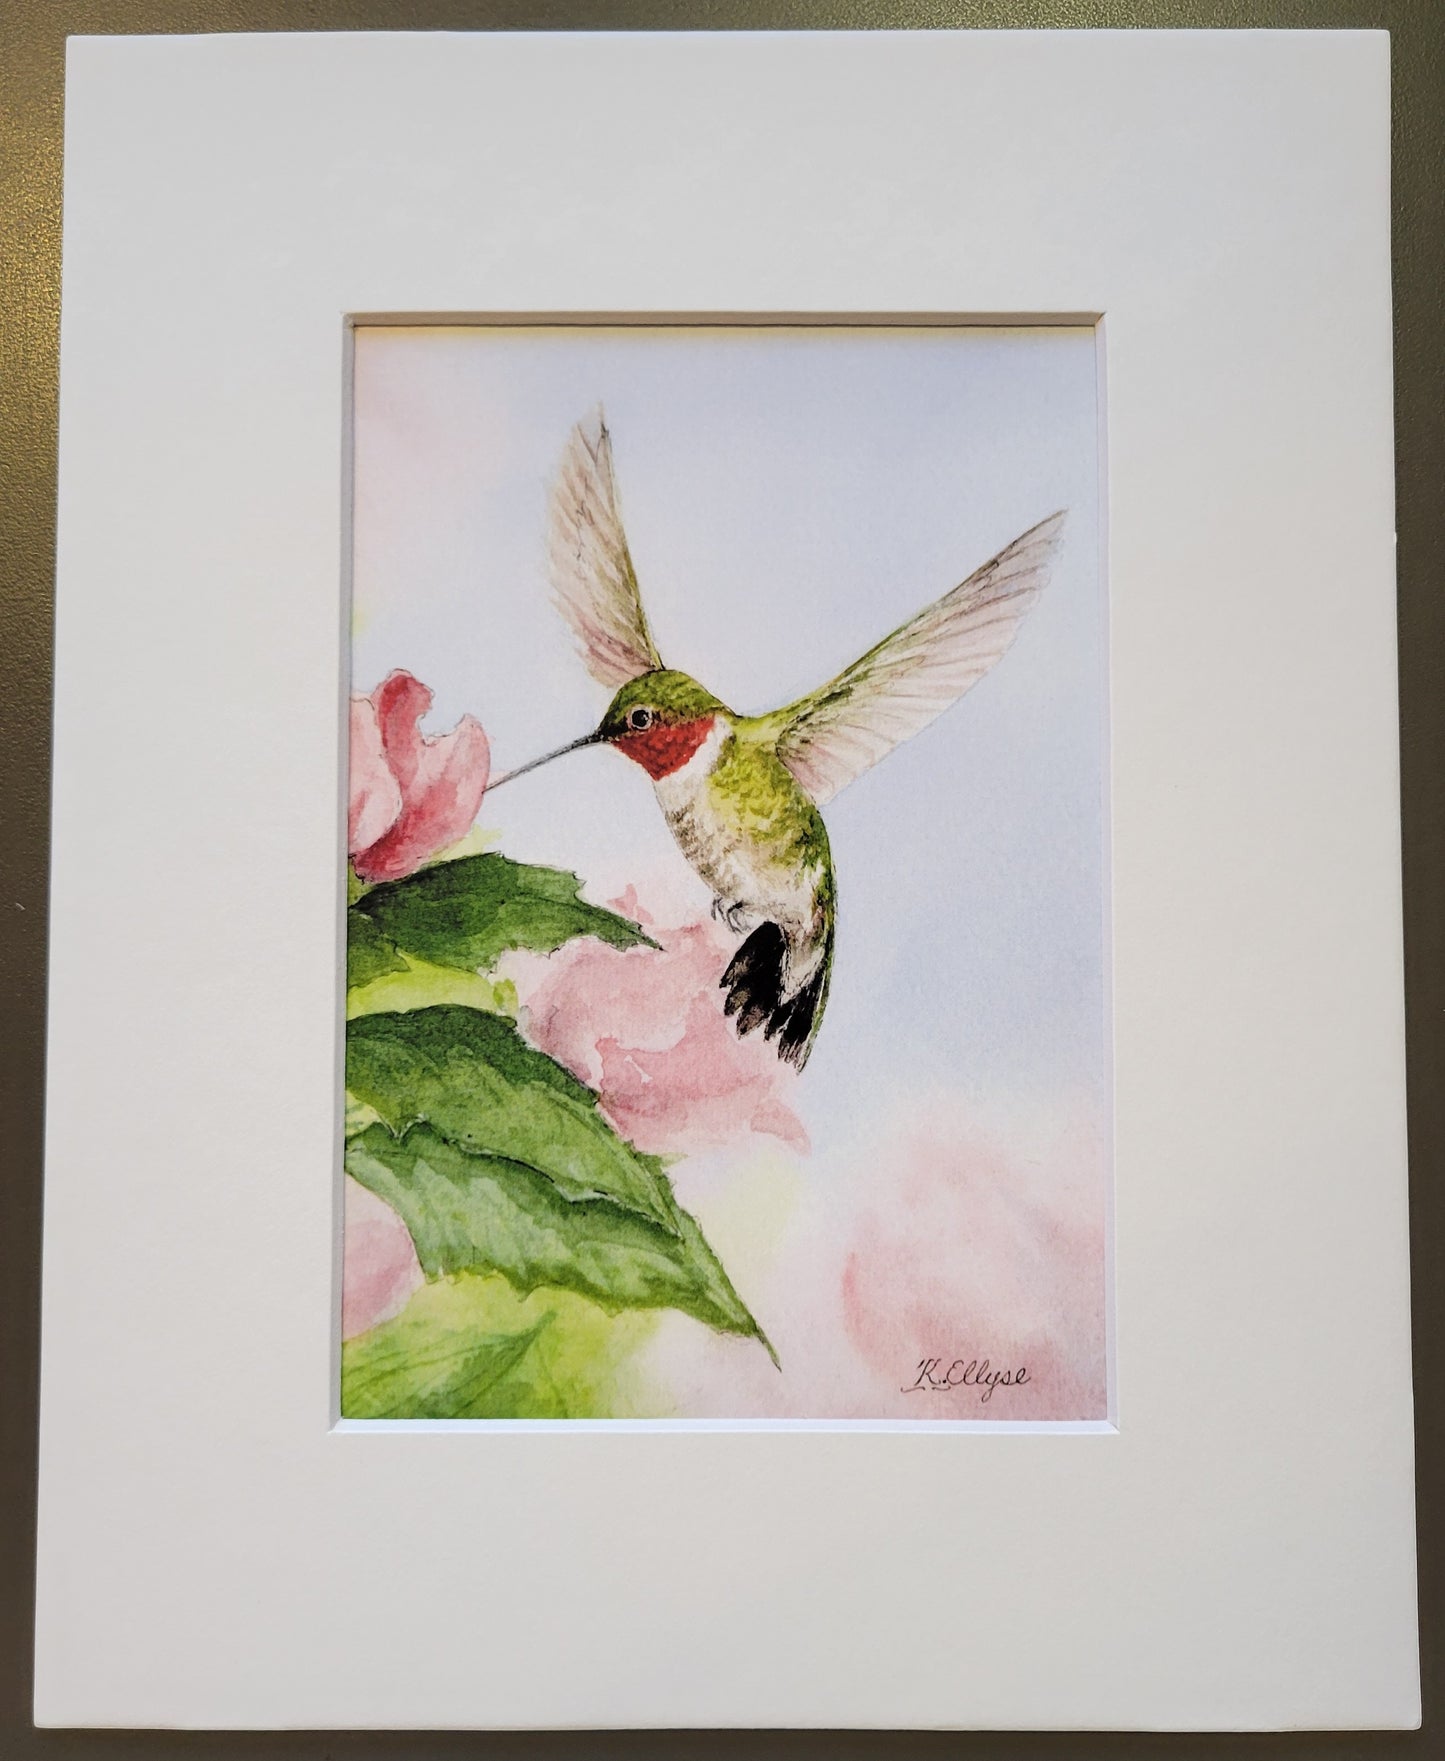 Watercolor Prints - Ellyse's Studio, Birds, 8x10